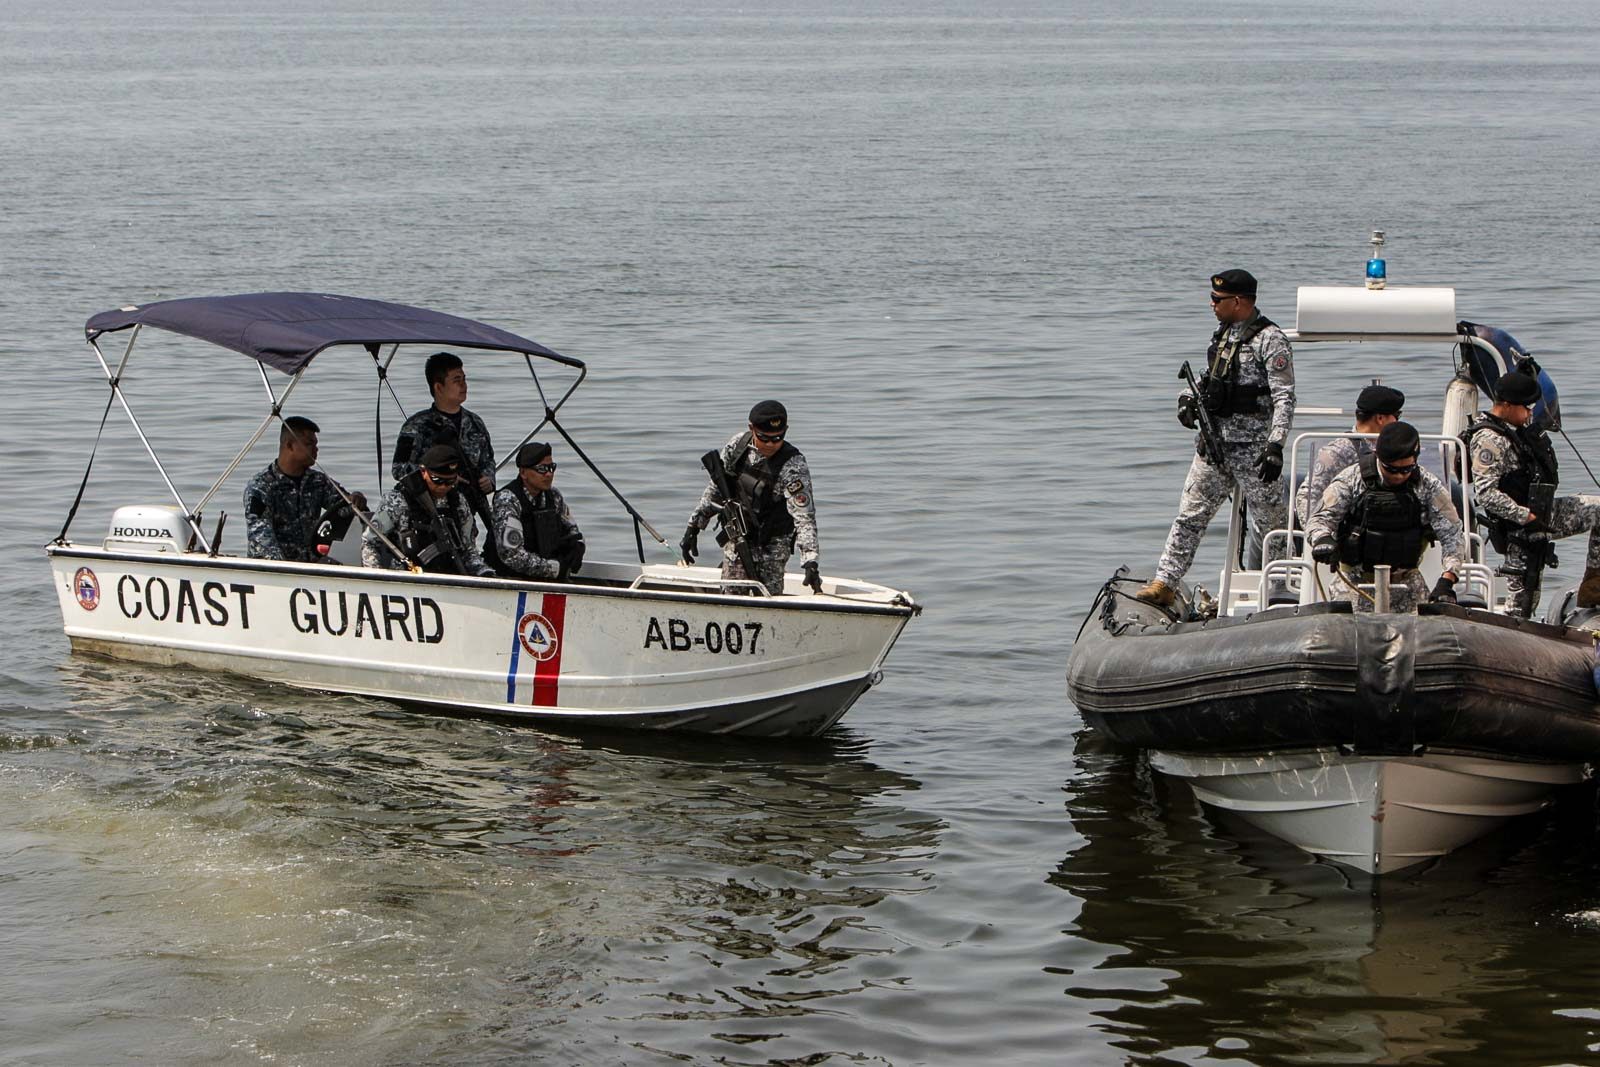 Coast Guard to enforce ‘no sail’ policy during lockdown